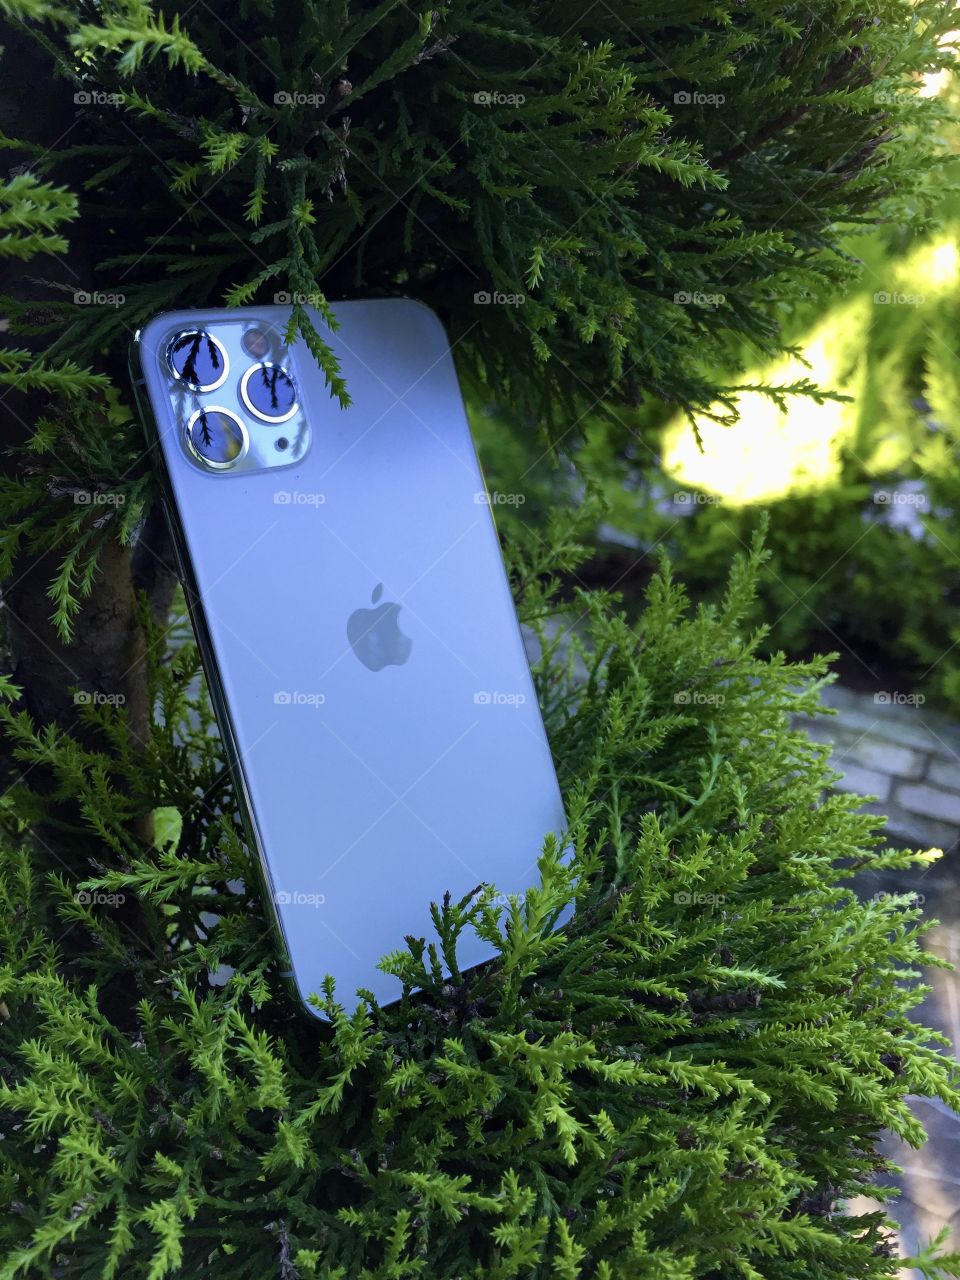 Selfphone among the greenery. iPhone 11pro